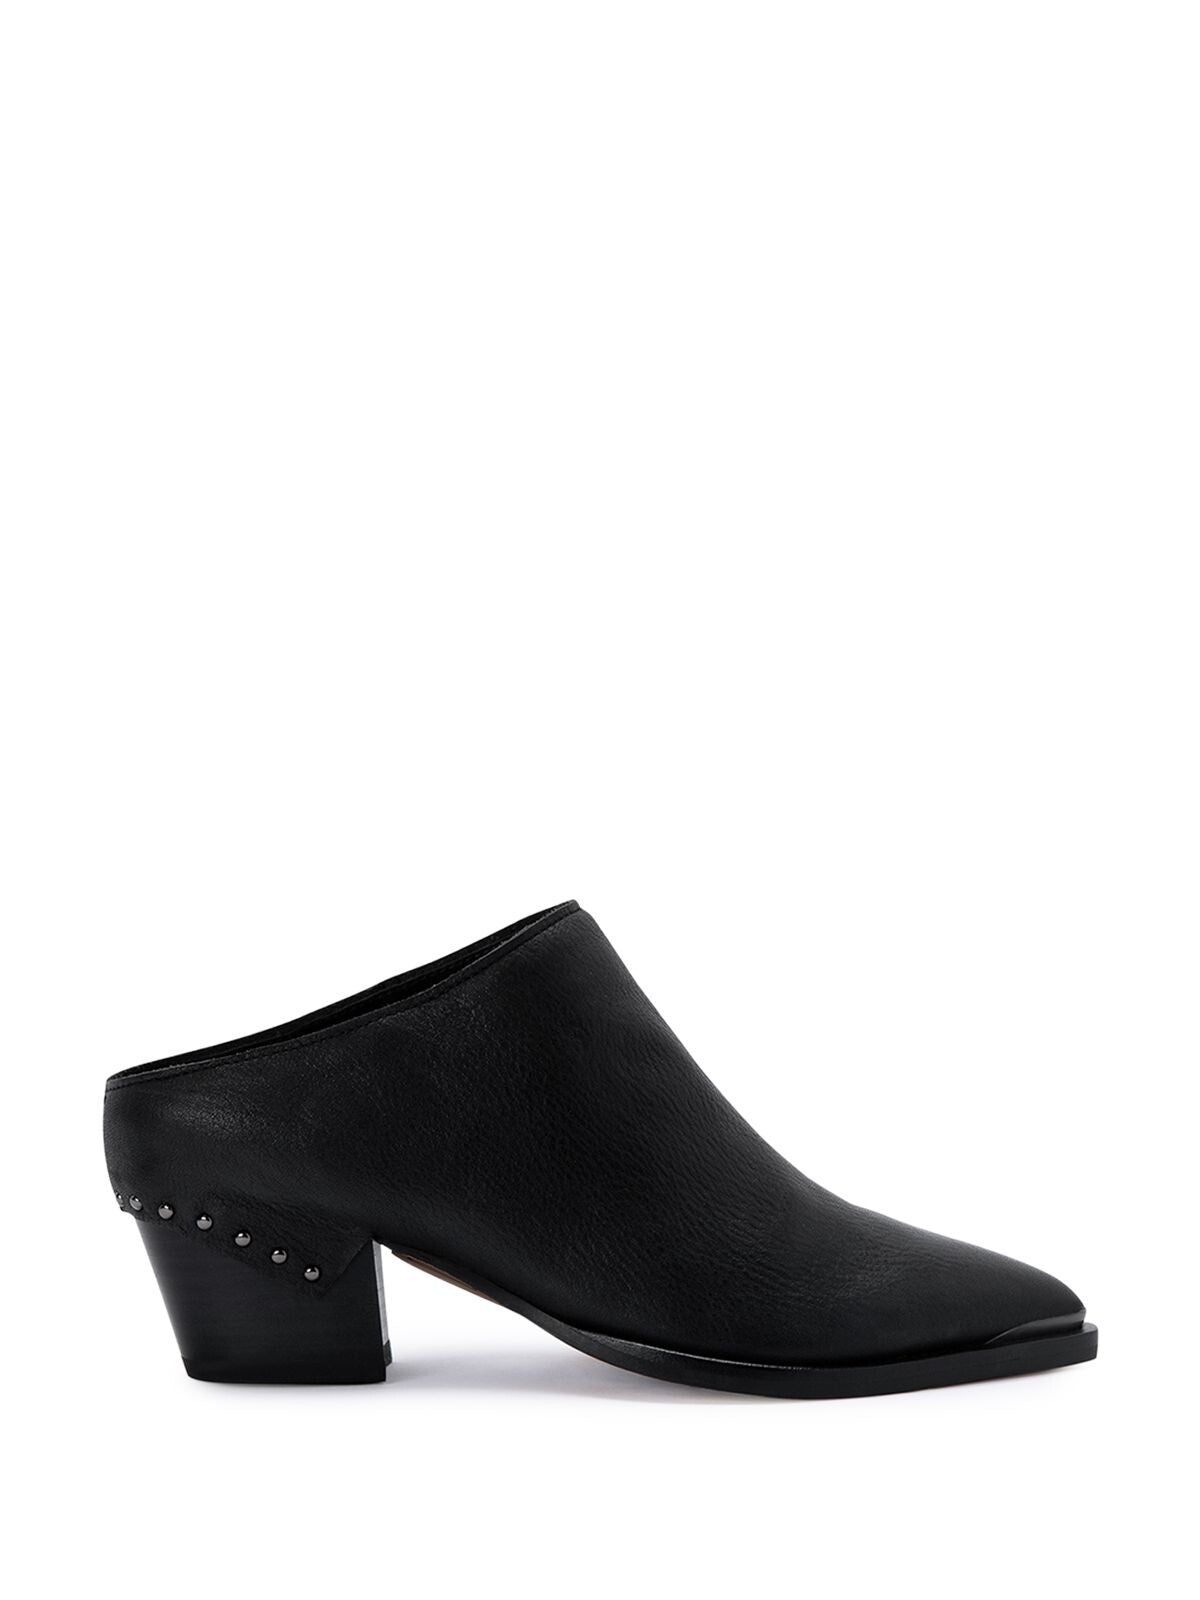 DOLCE VITA Womens Black Studded Comfort Sukie Square Toe Block Heel Slip On Leather Heeled Mules Shoes 7.5